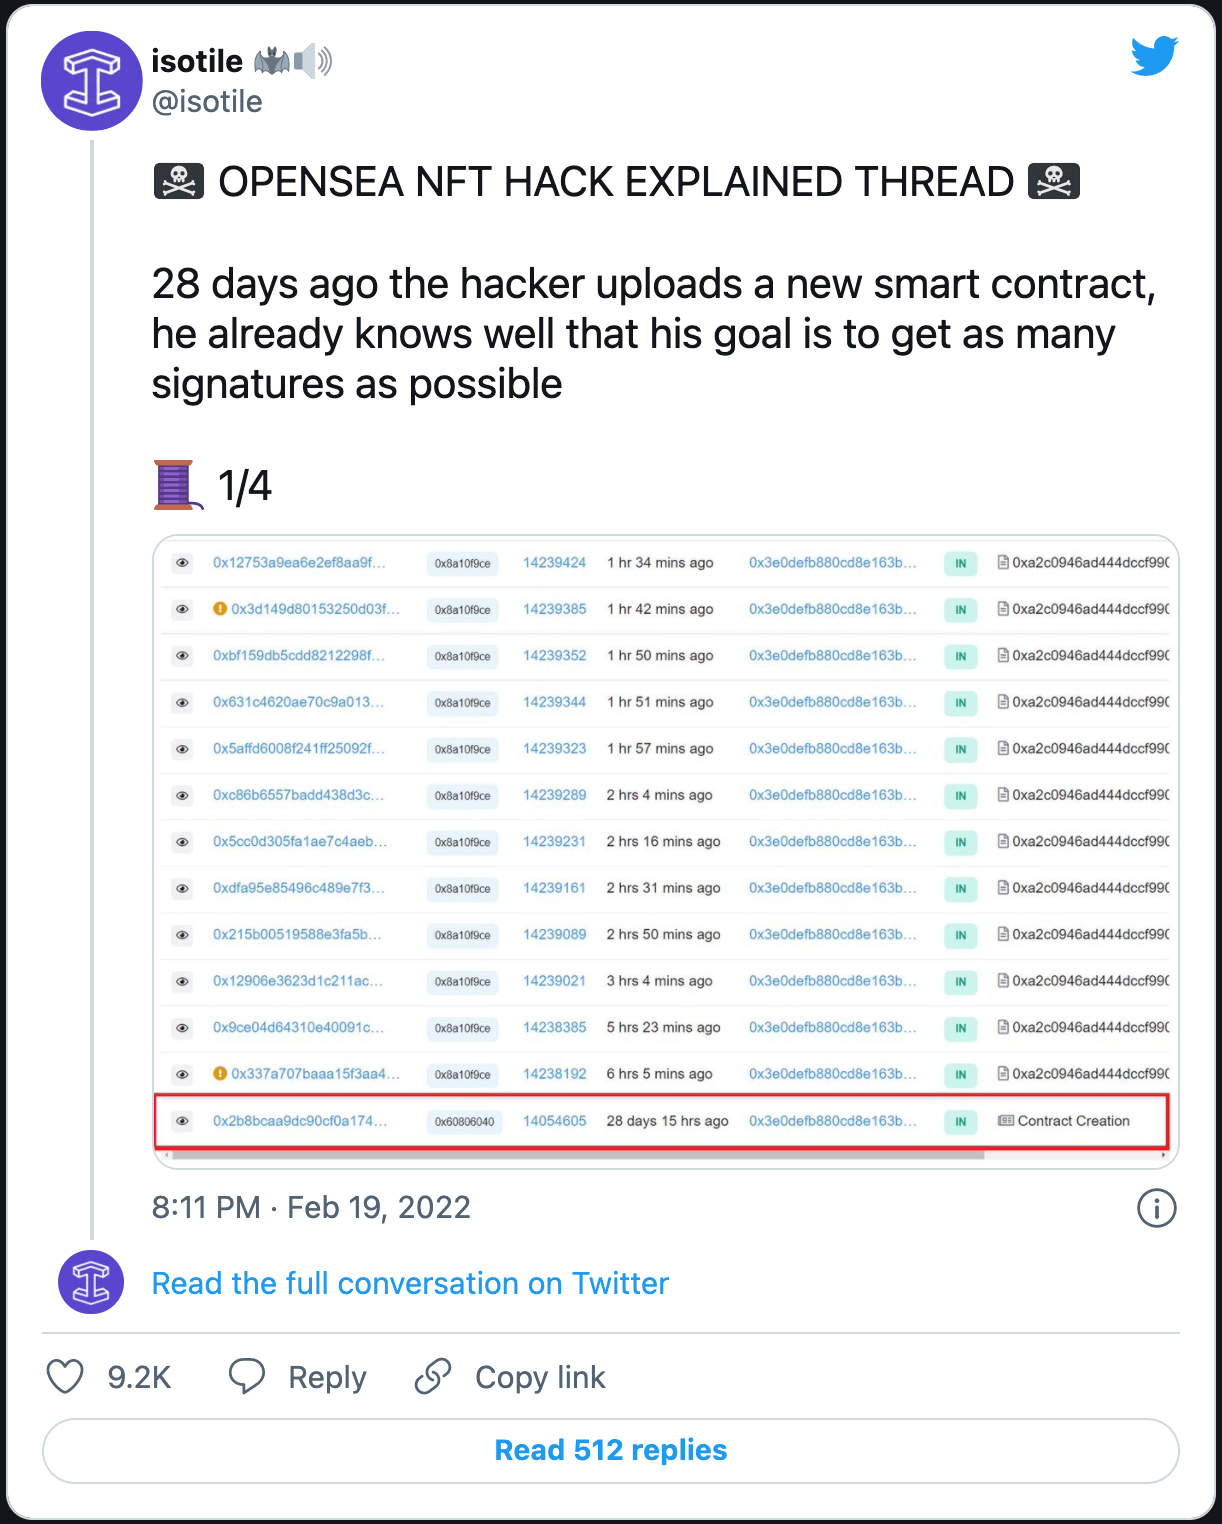 @isotile tweet thread explaining OpenSea attack